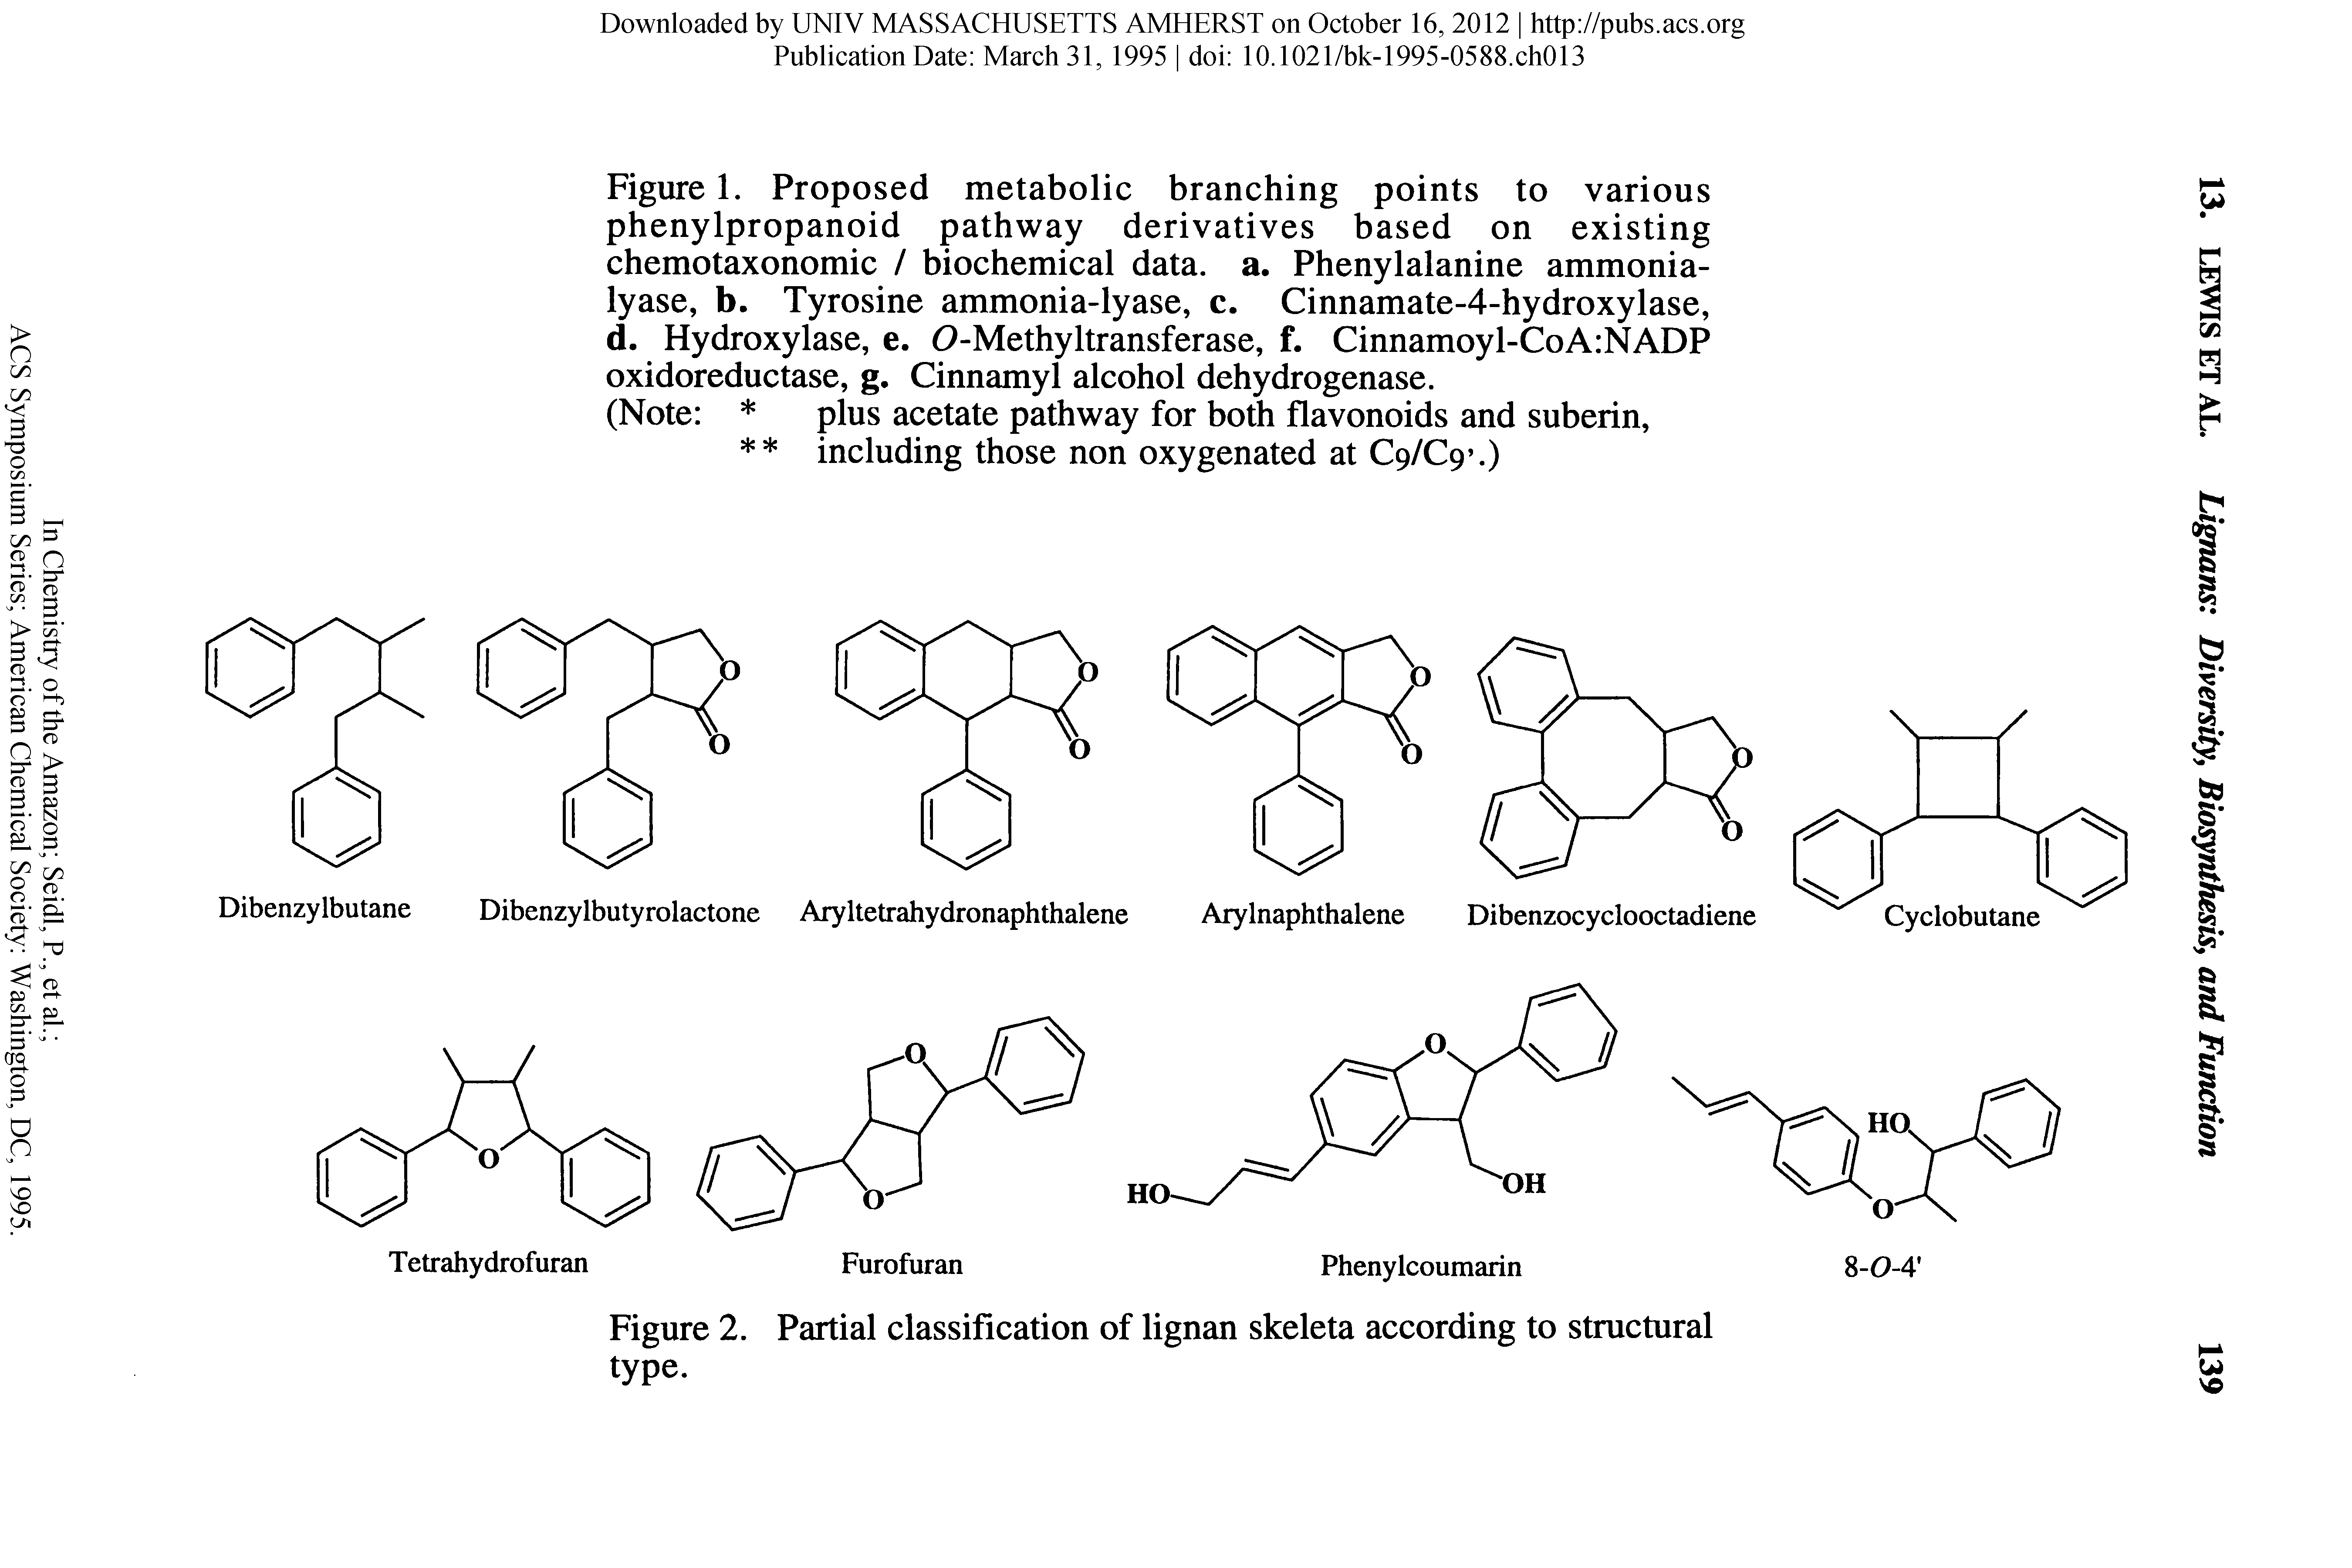 Figure 1. Proposed metabolic branching points to various phenylpropanoid pathway derivatives based on existing chemotaxonomic / biochemical data. a. Phenylalanine ammonia-lyase, b. Tyrosine ammonia-lyase, c. Cinnamate-4-hydroxylase, d. Hydroxylase, e. 0-Methyltransferase, f. Cinnamoyl-CoA NADP oxidoreductase, g. Cinnamyl alcohol dehydrogenase.